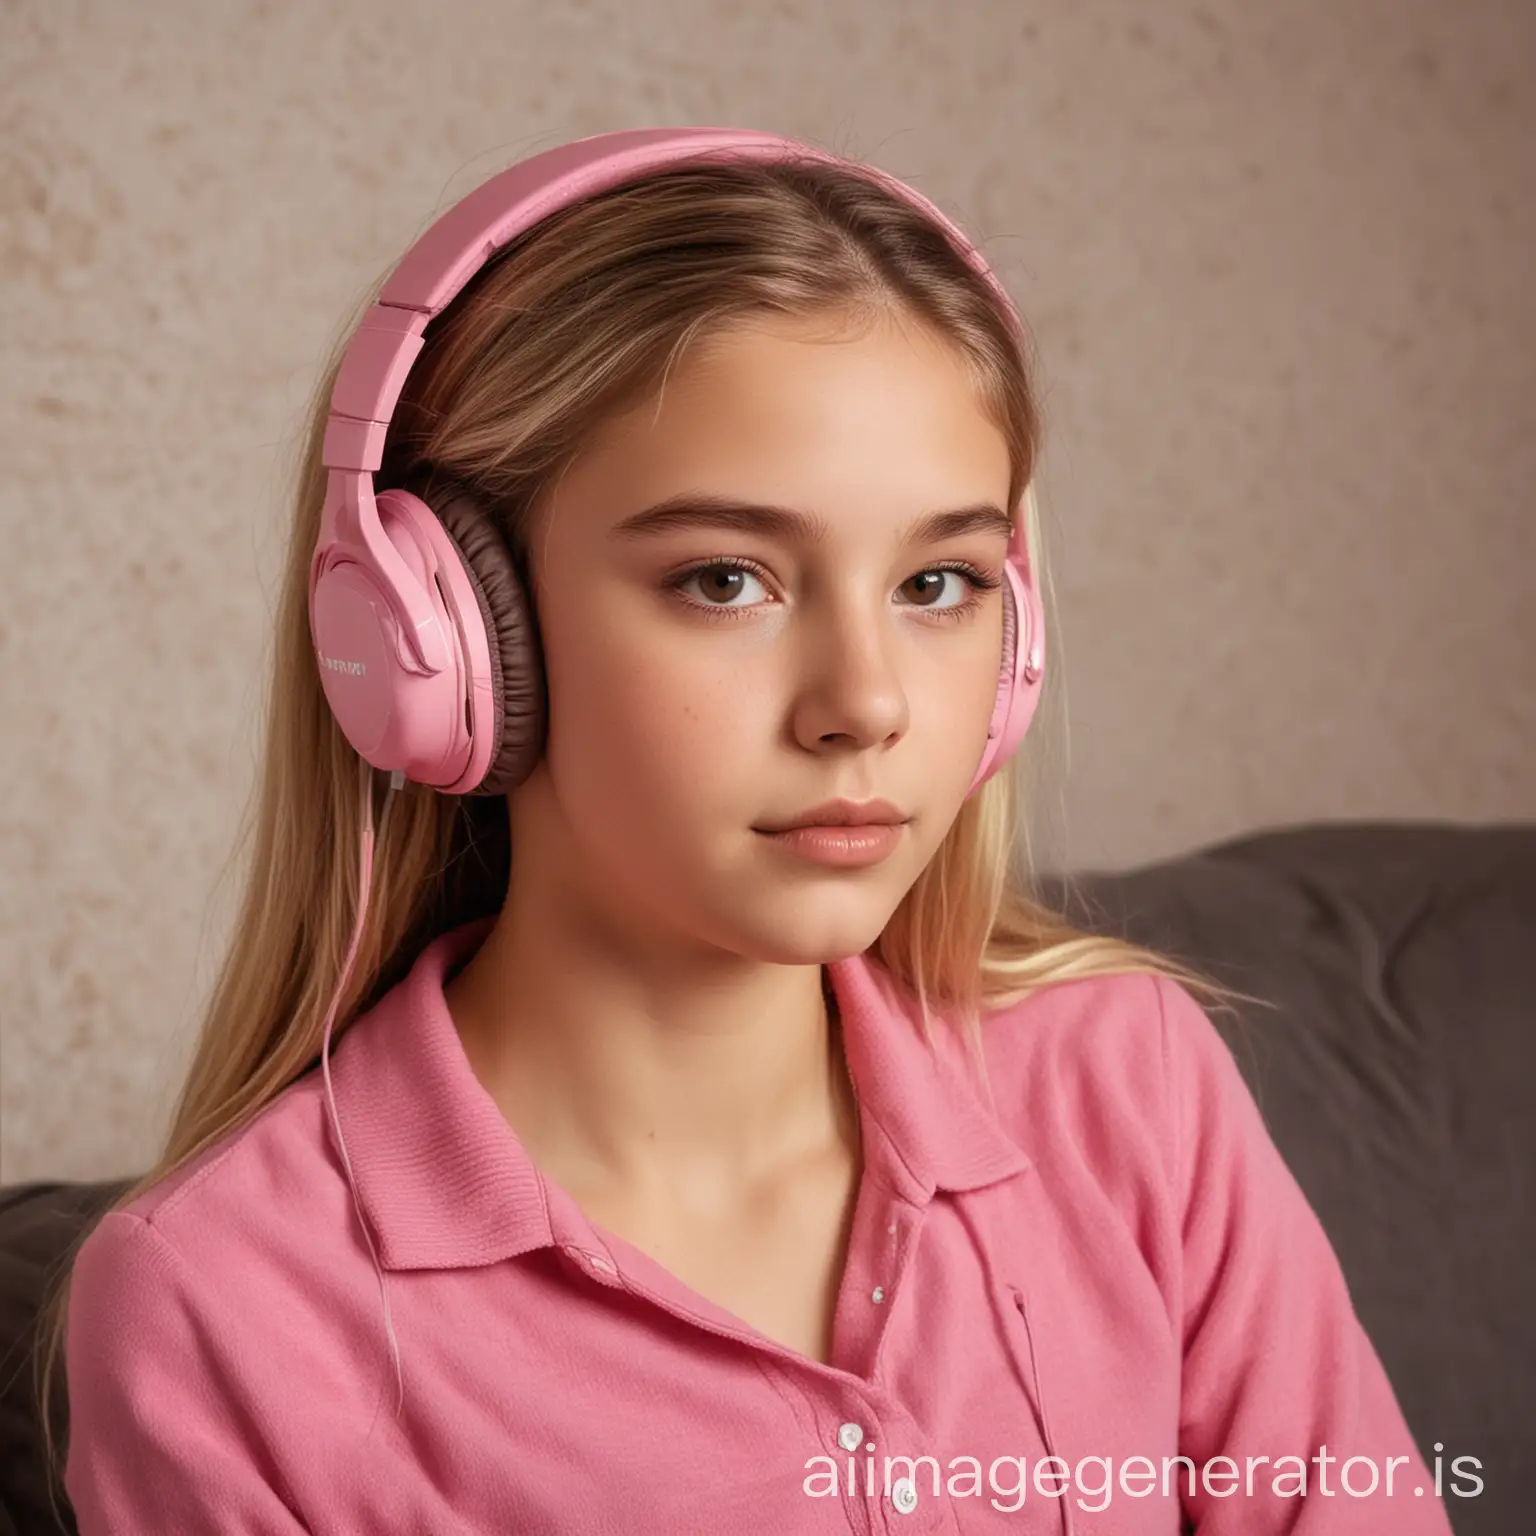 15 year old girl, blonde hair, brown eyes, listening to pink headset, sat down